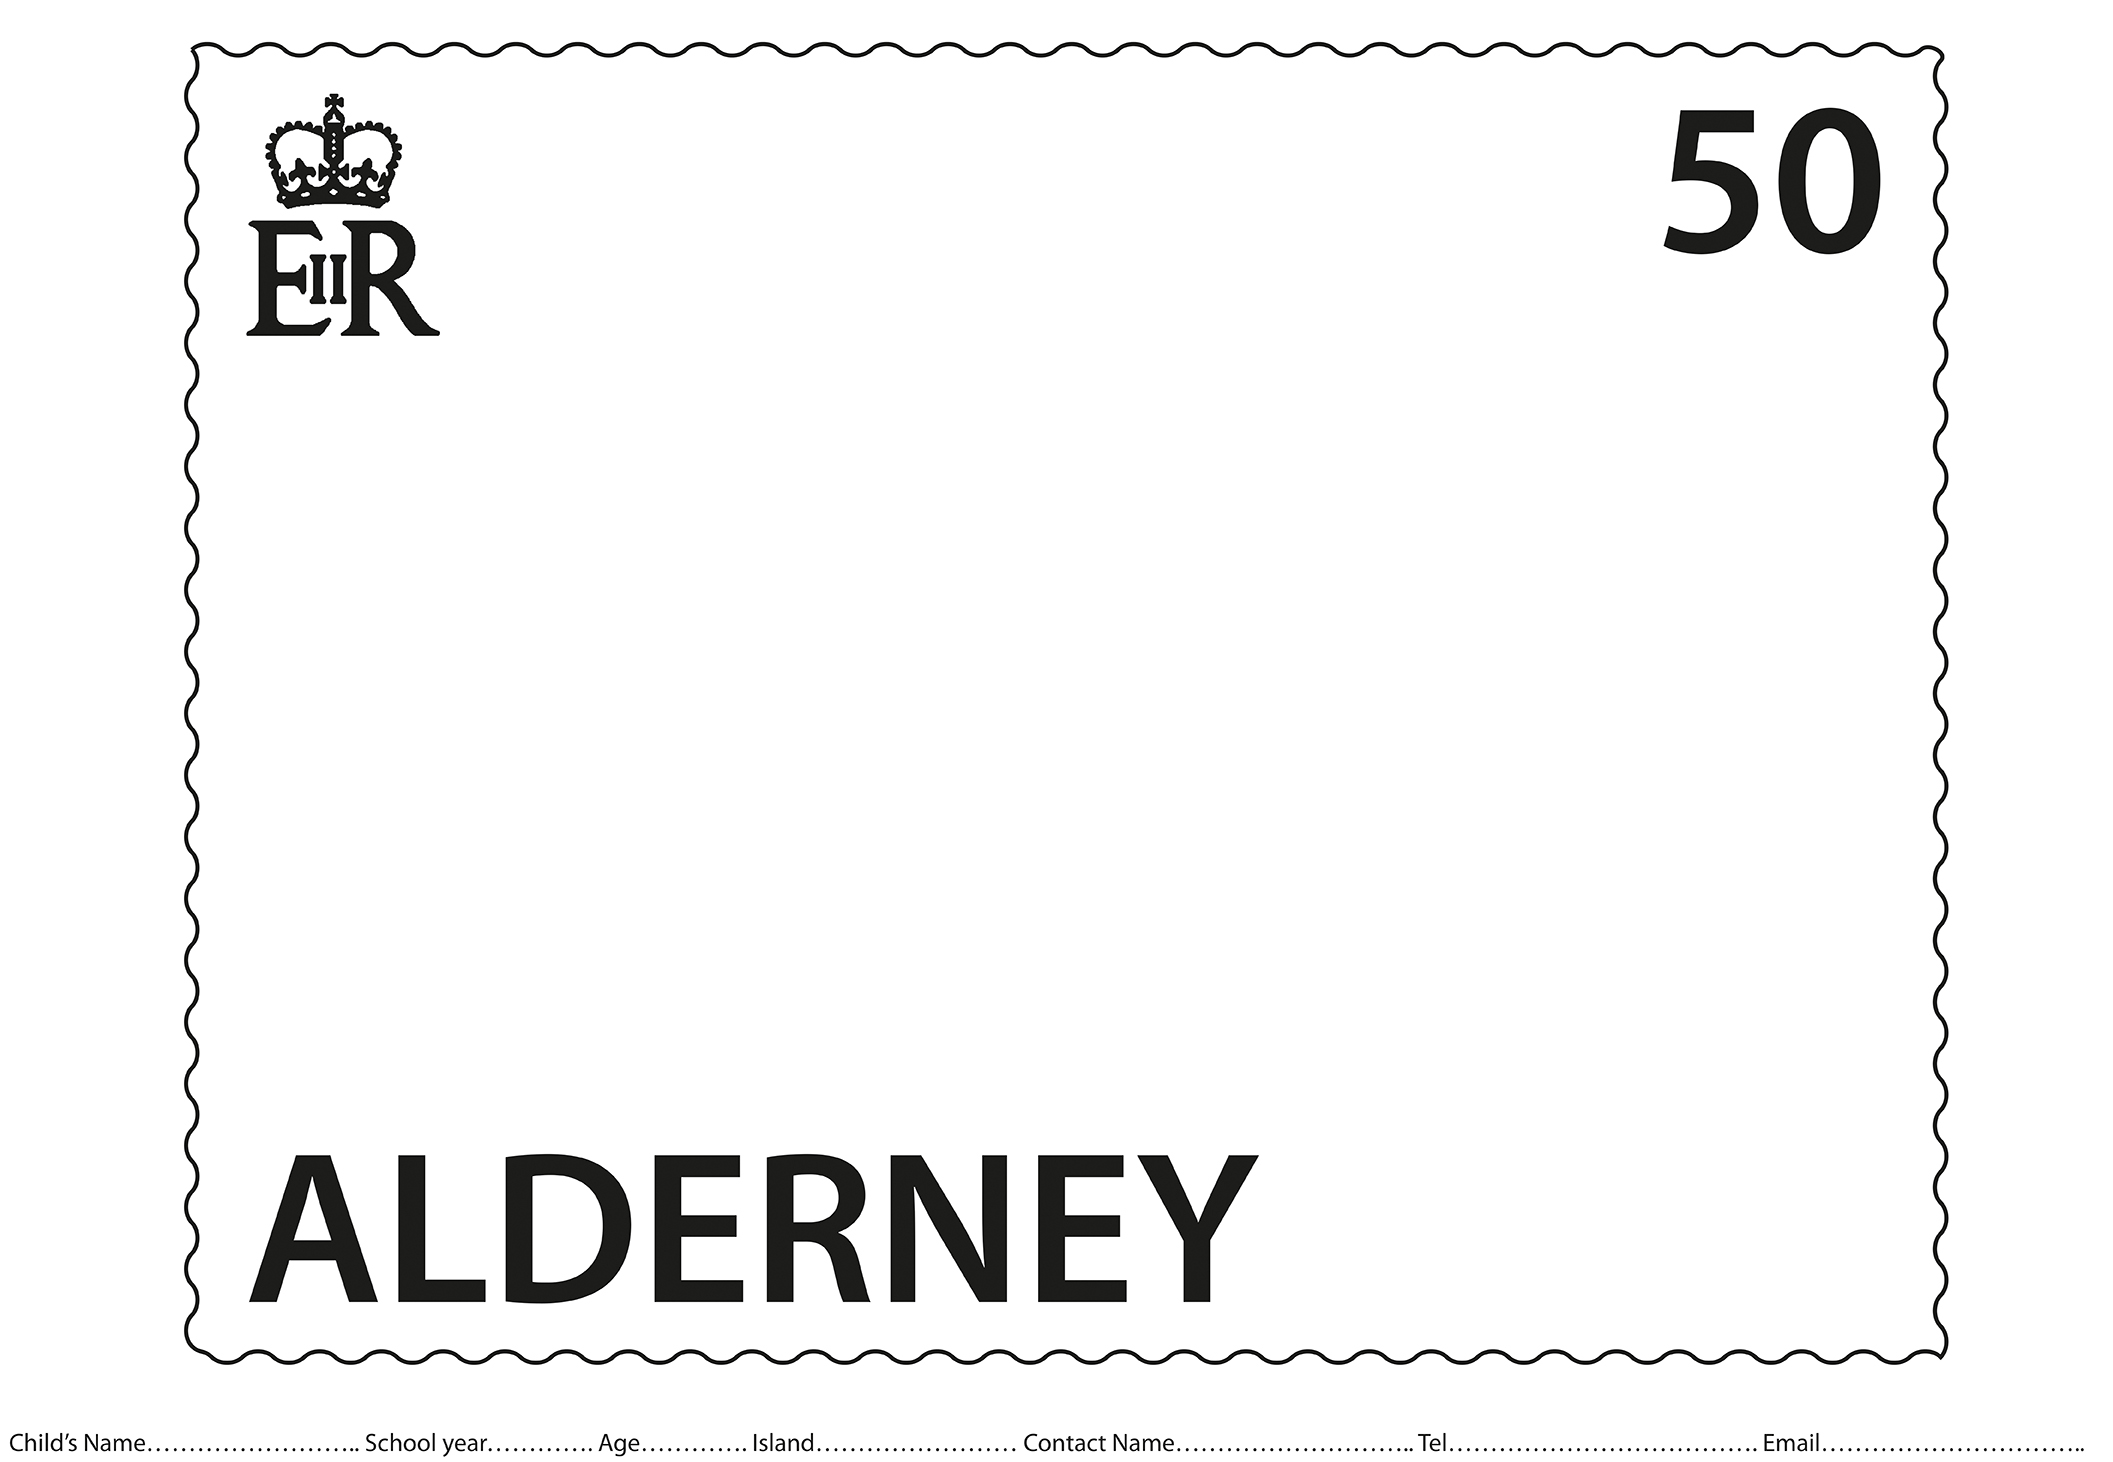 Local children invited to put their stamp on #AlderneySpirit charity competition